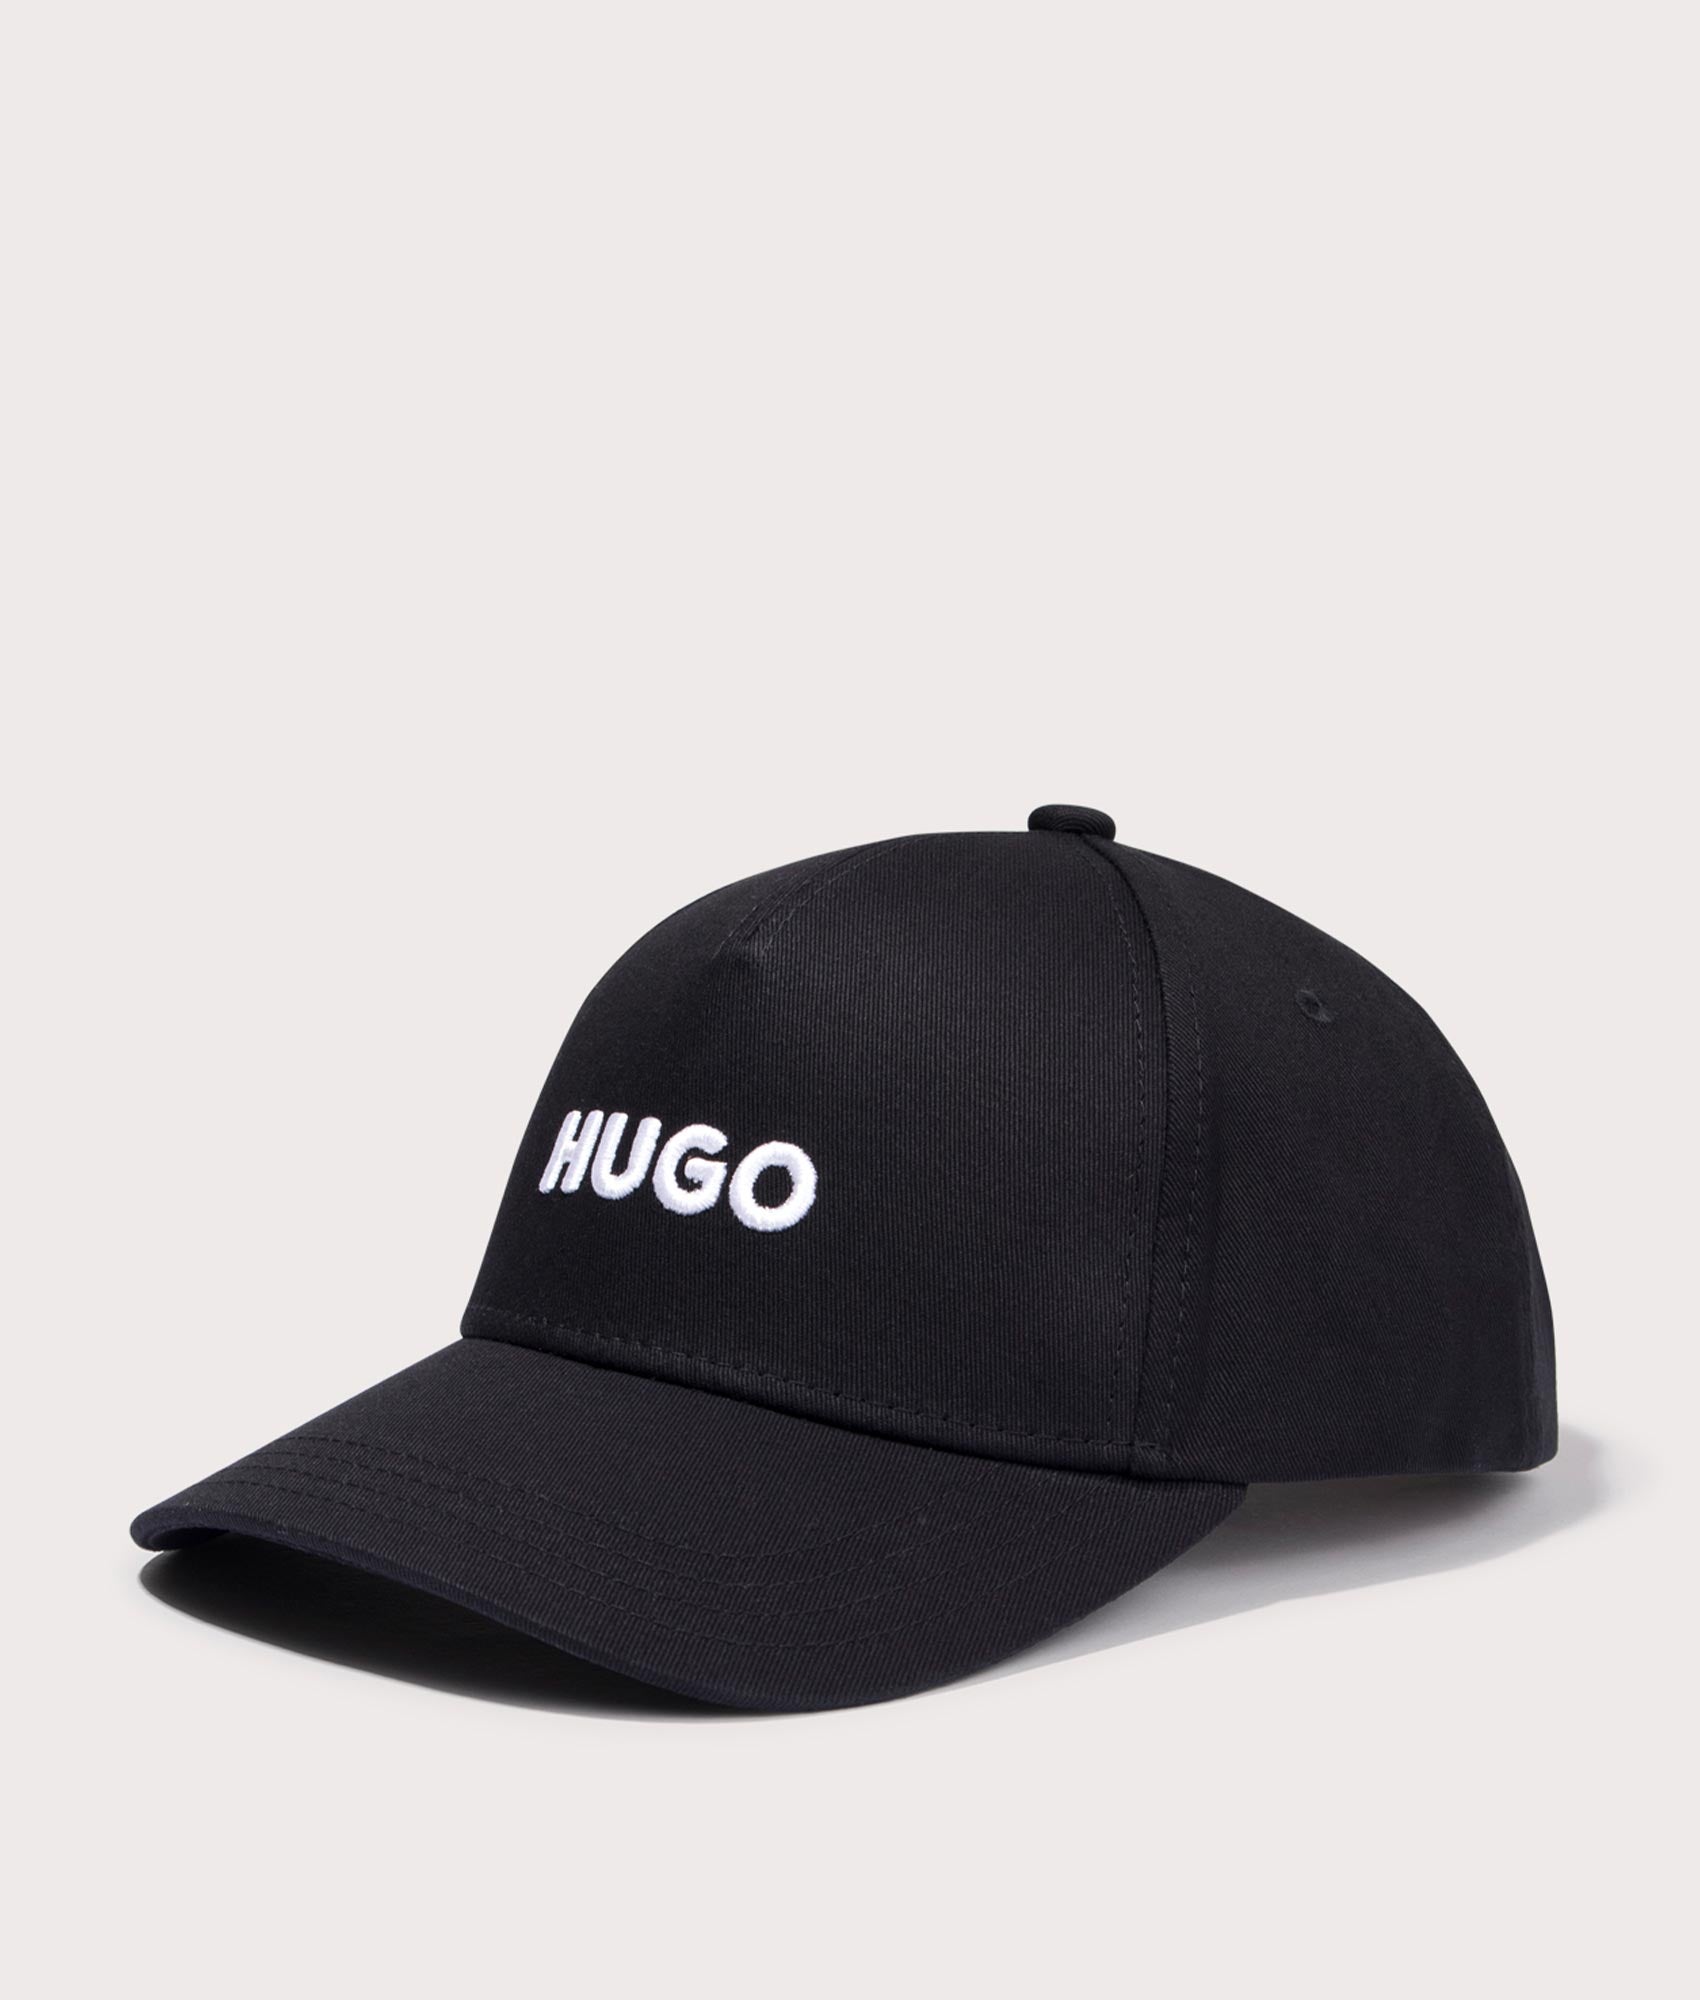 HUGO Mens Jude BL Cap - Colour: 001 Black - Size: One Size